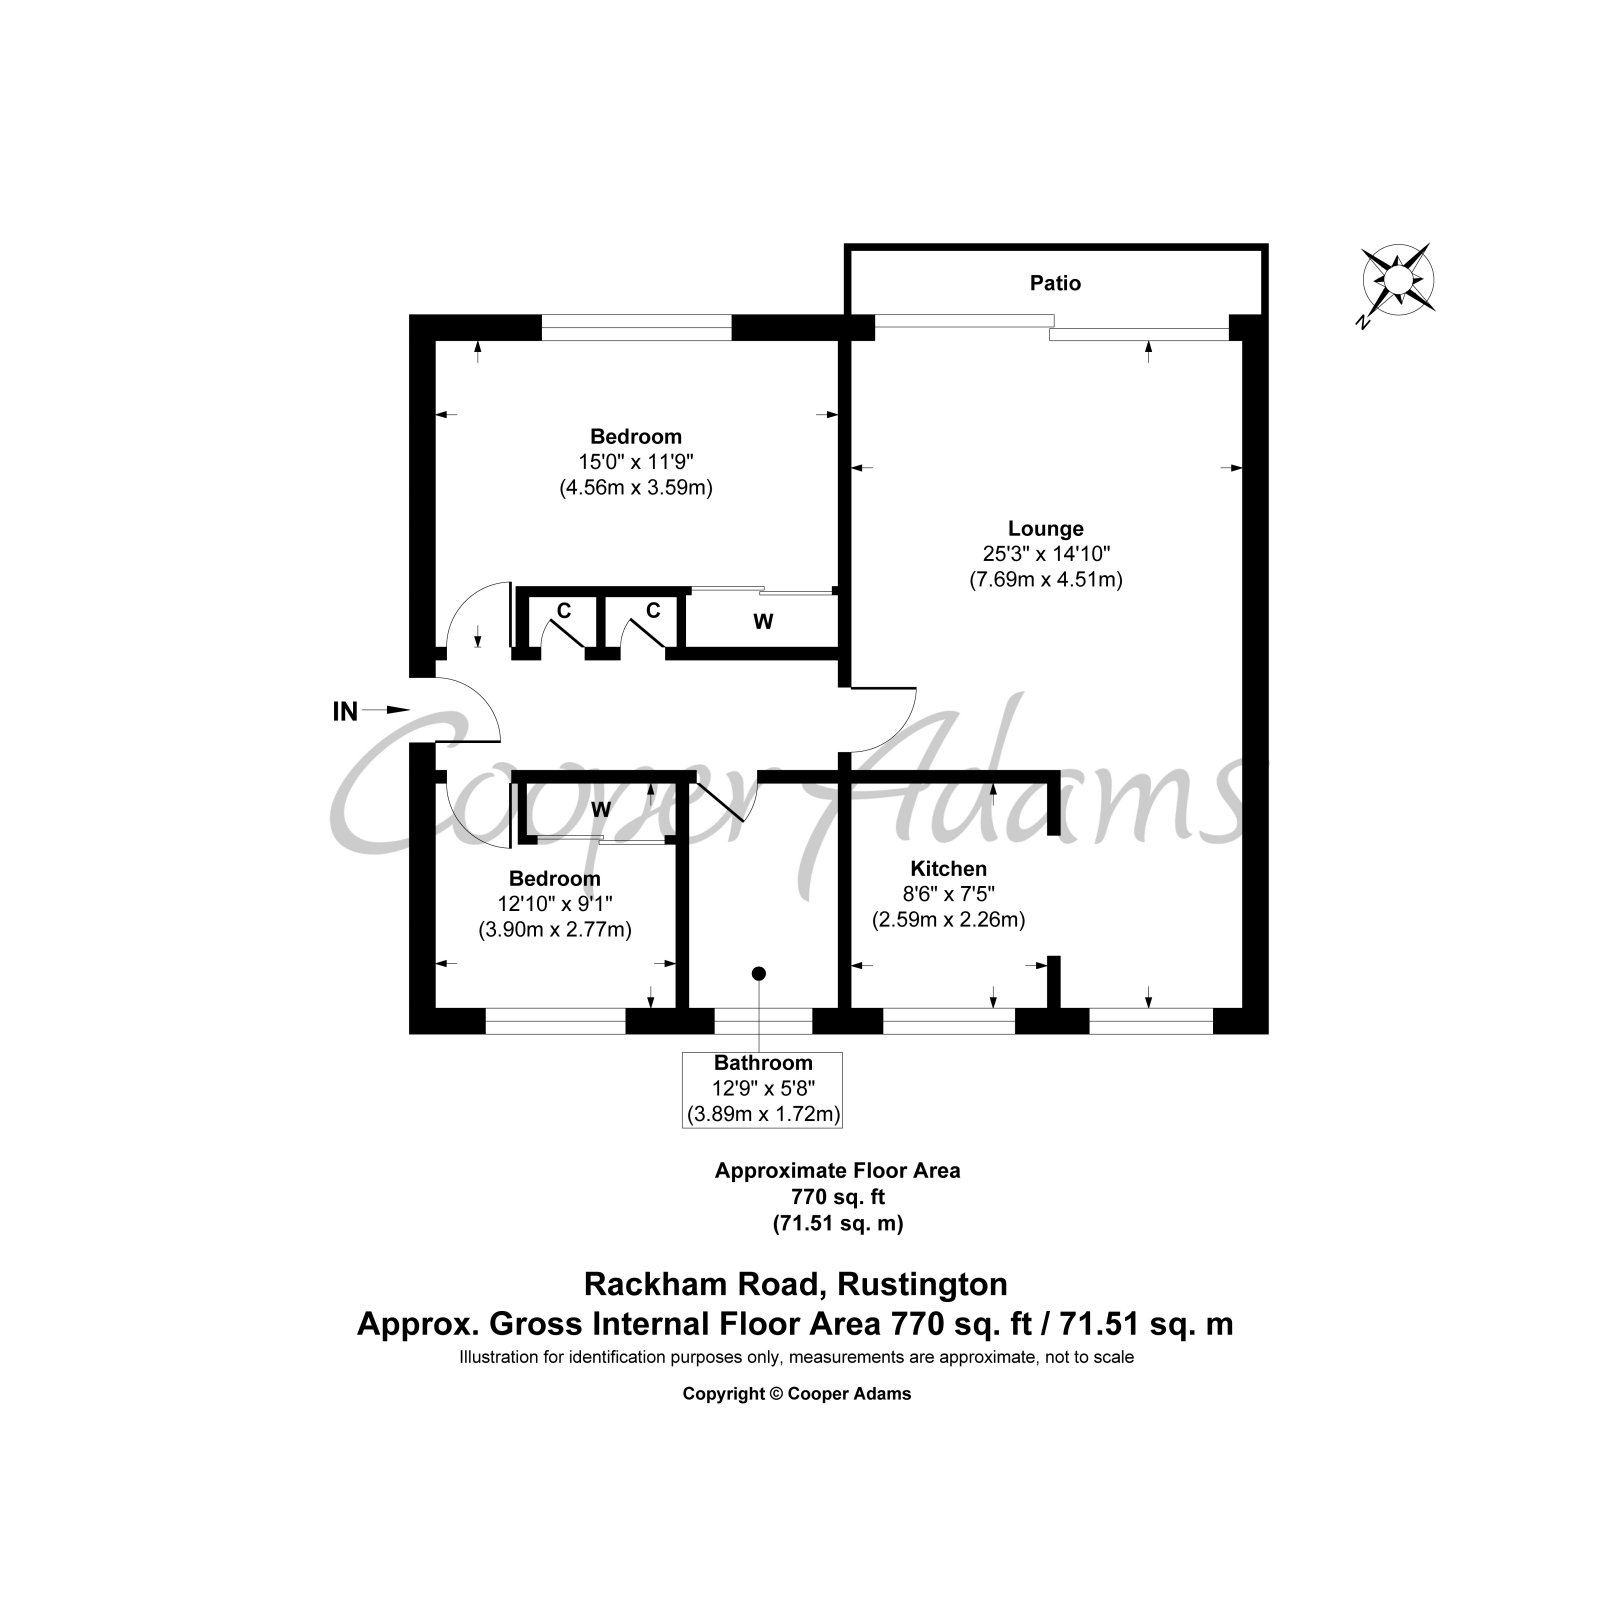 2 bed apartment for sale in Rackham Road, Rustington - Property floorplan